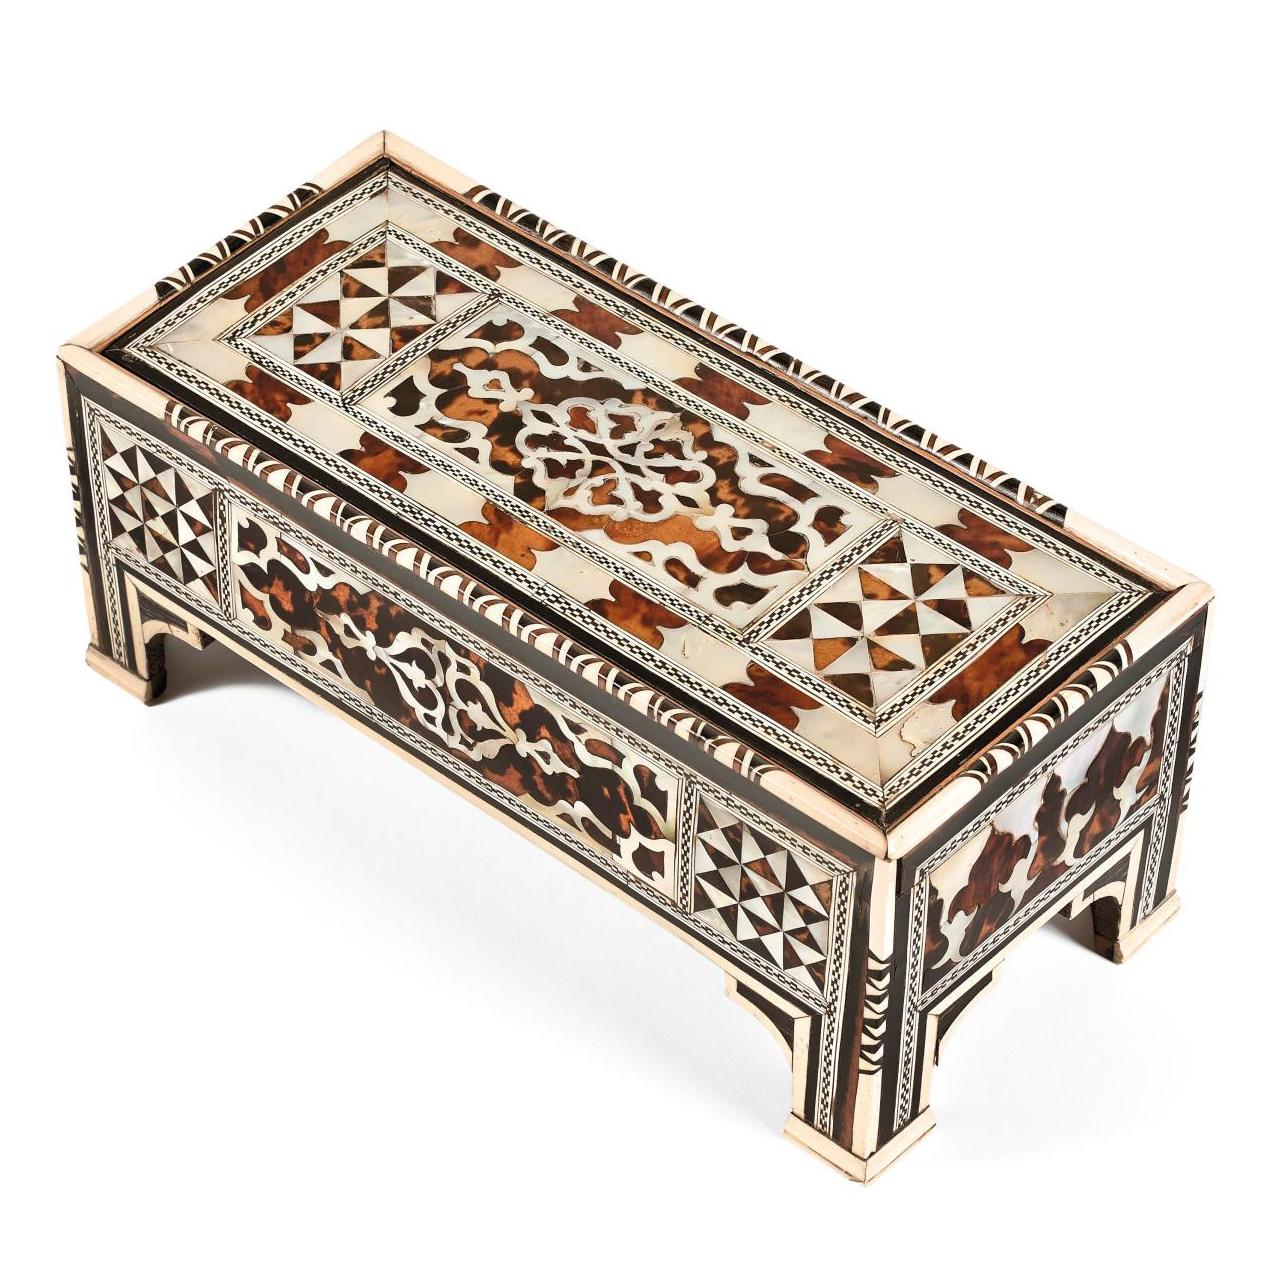 An Ottoman Portable Desk  - Pre-sale